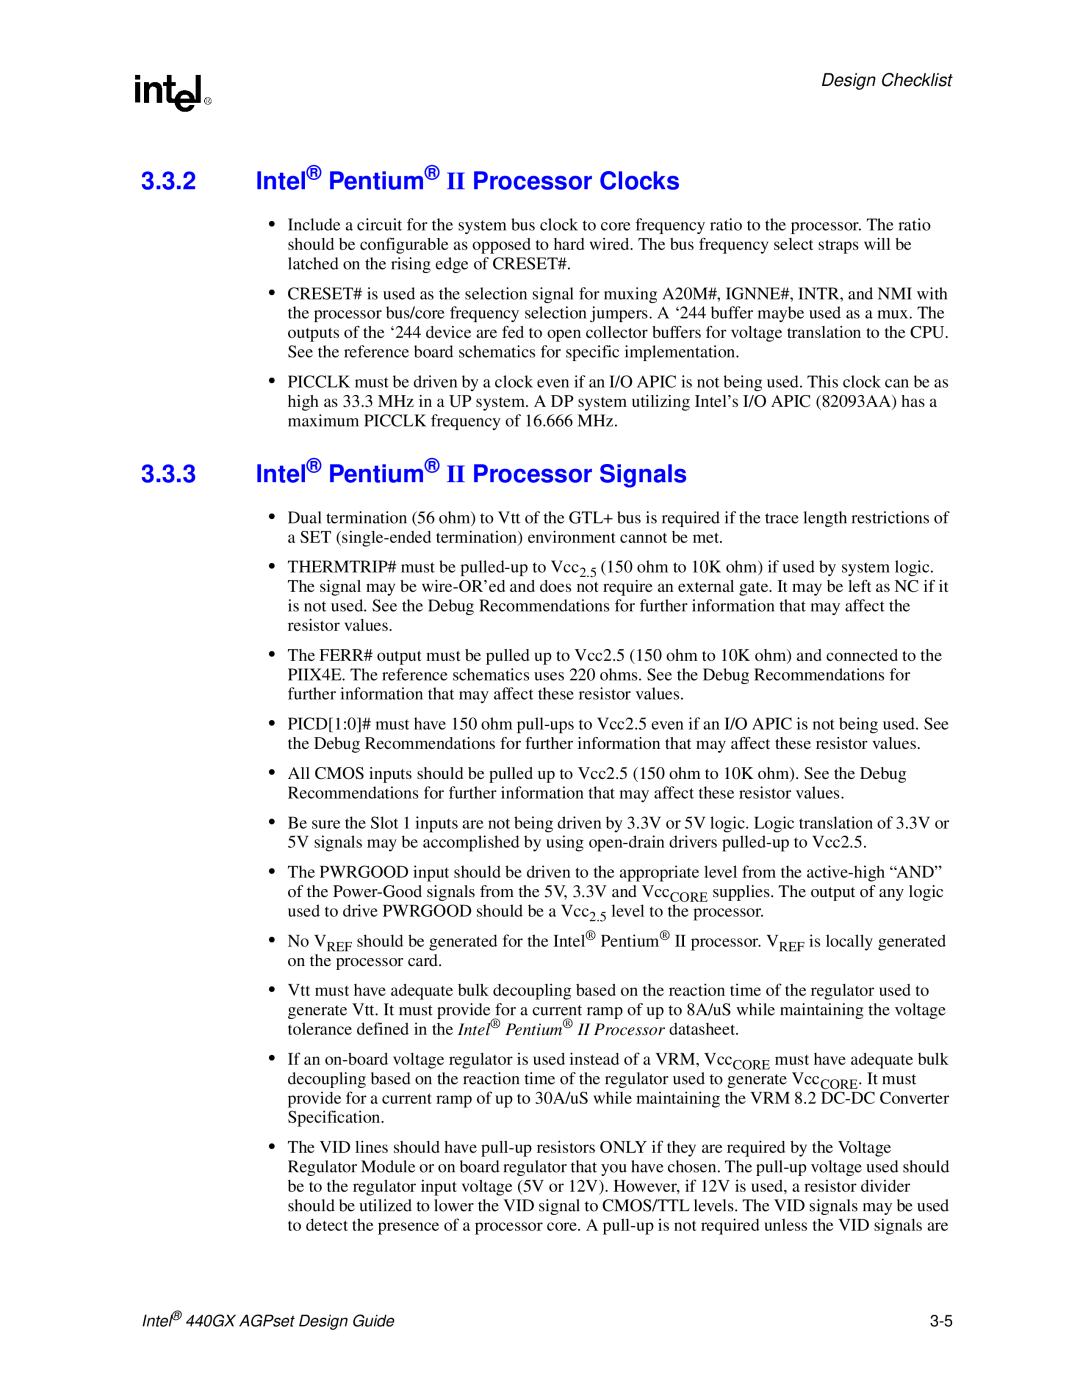 Intel 440GX manual Intel Pentium II Processor Clocks, Intel Pentium II Processor Signals, Design Checklist 